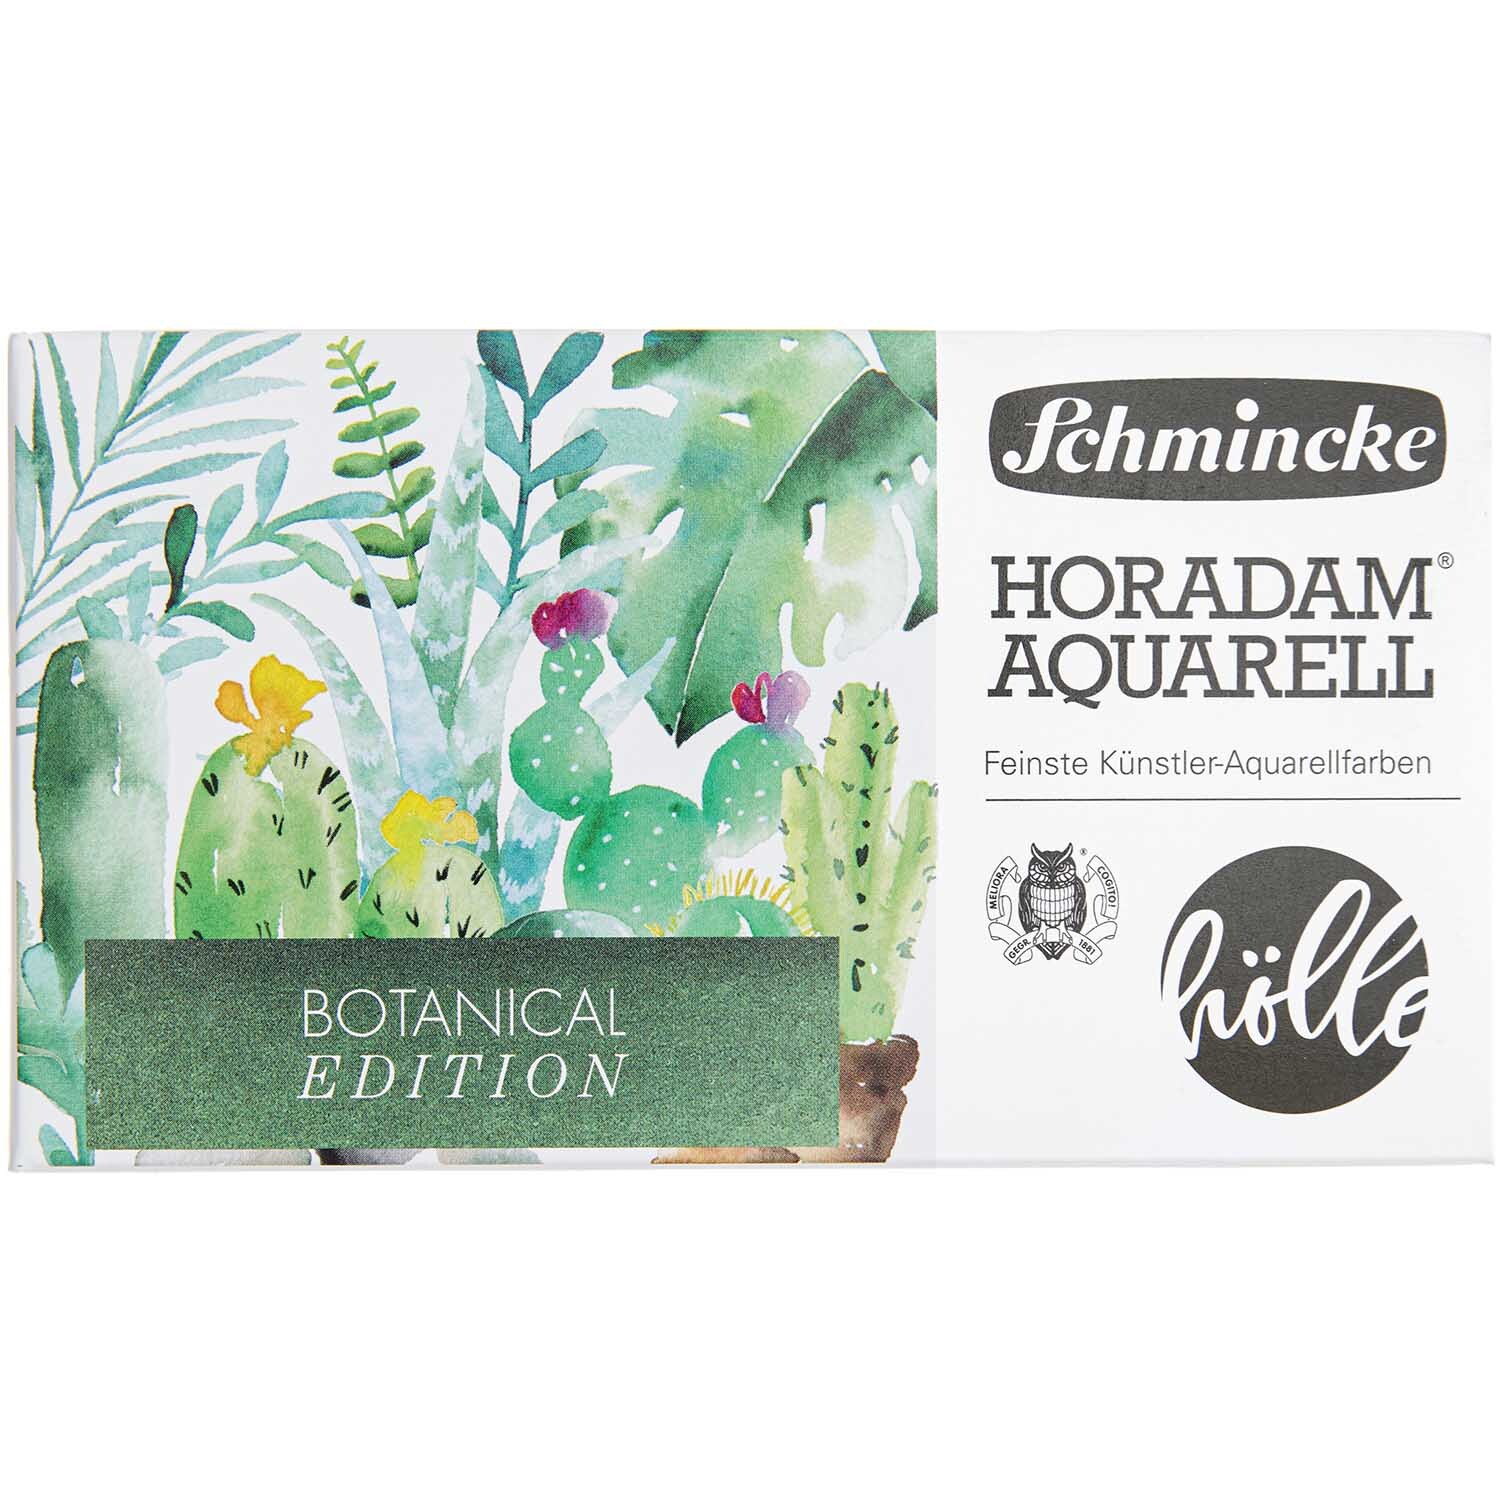 Schmincke Horadam Aquarellkasten Frau Hölle Botanical Edition 12x halbe Näpfe